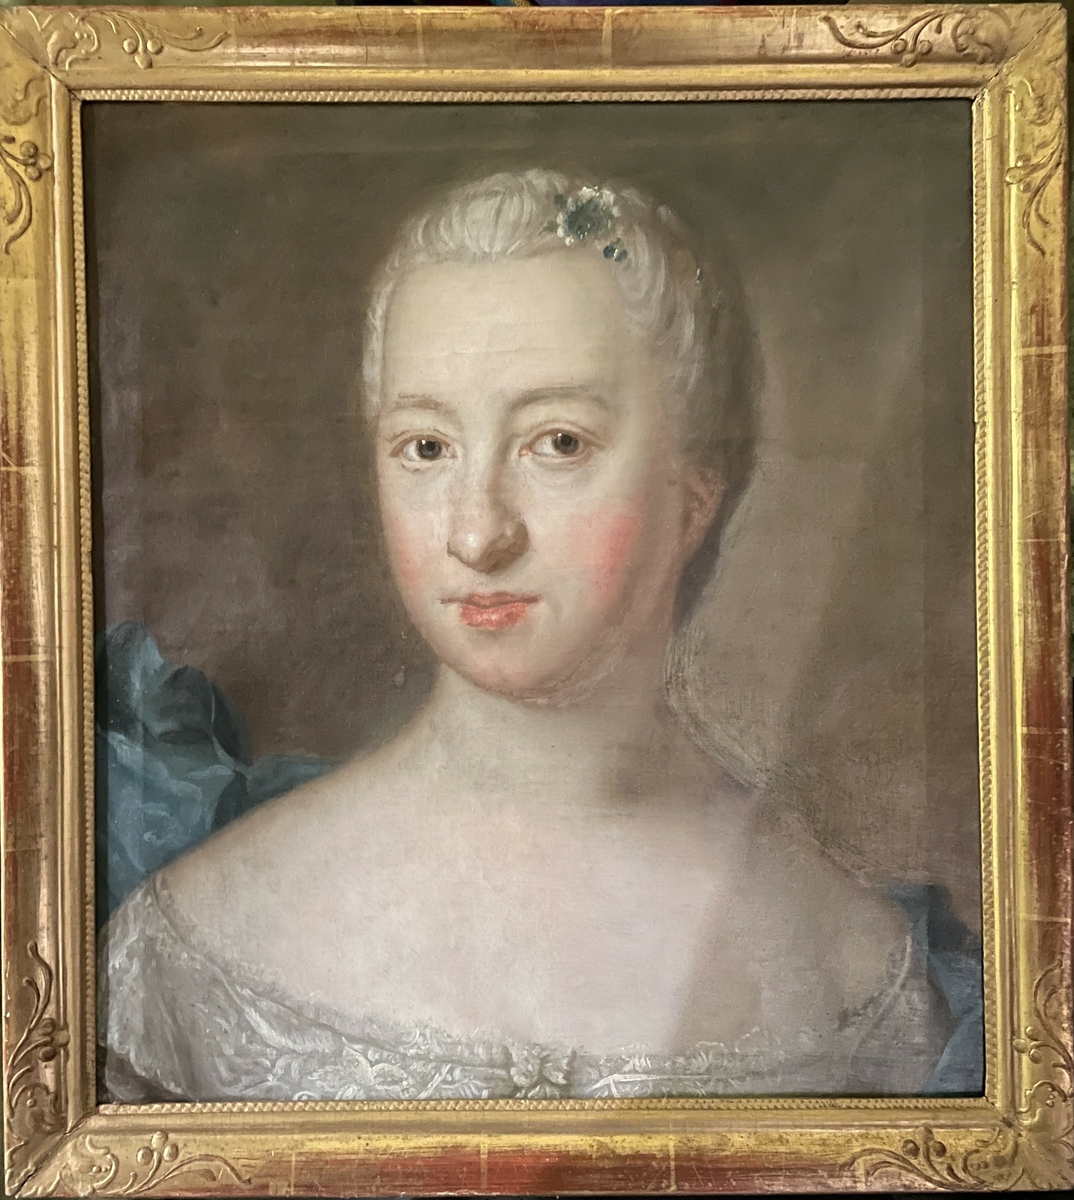 Löwenhielm, Sara Catharina (1739 - 1826)